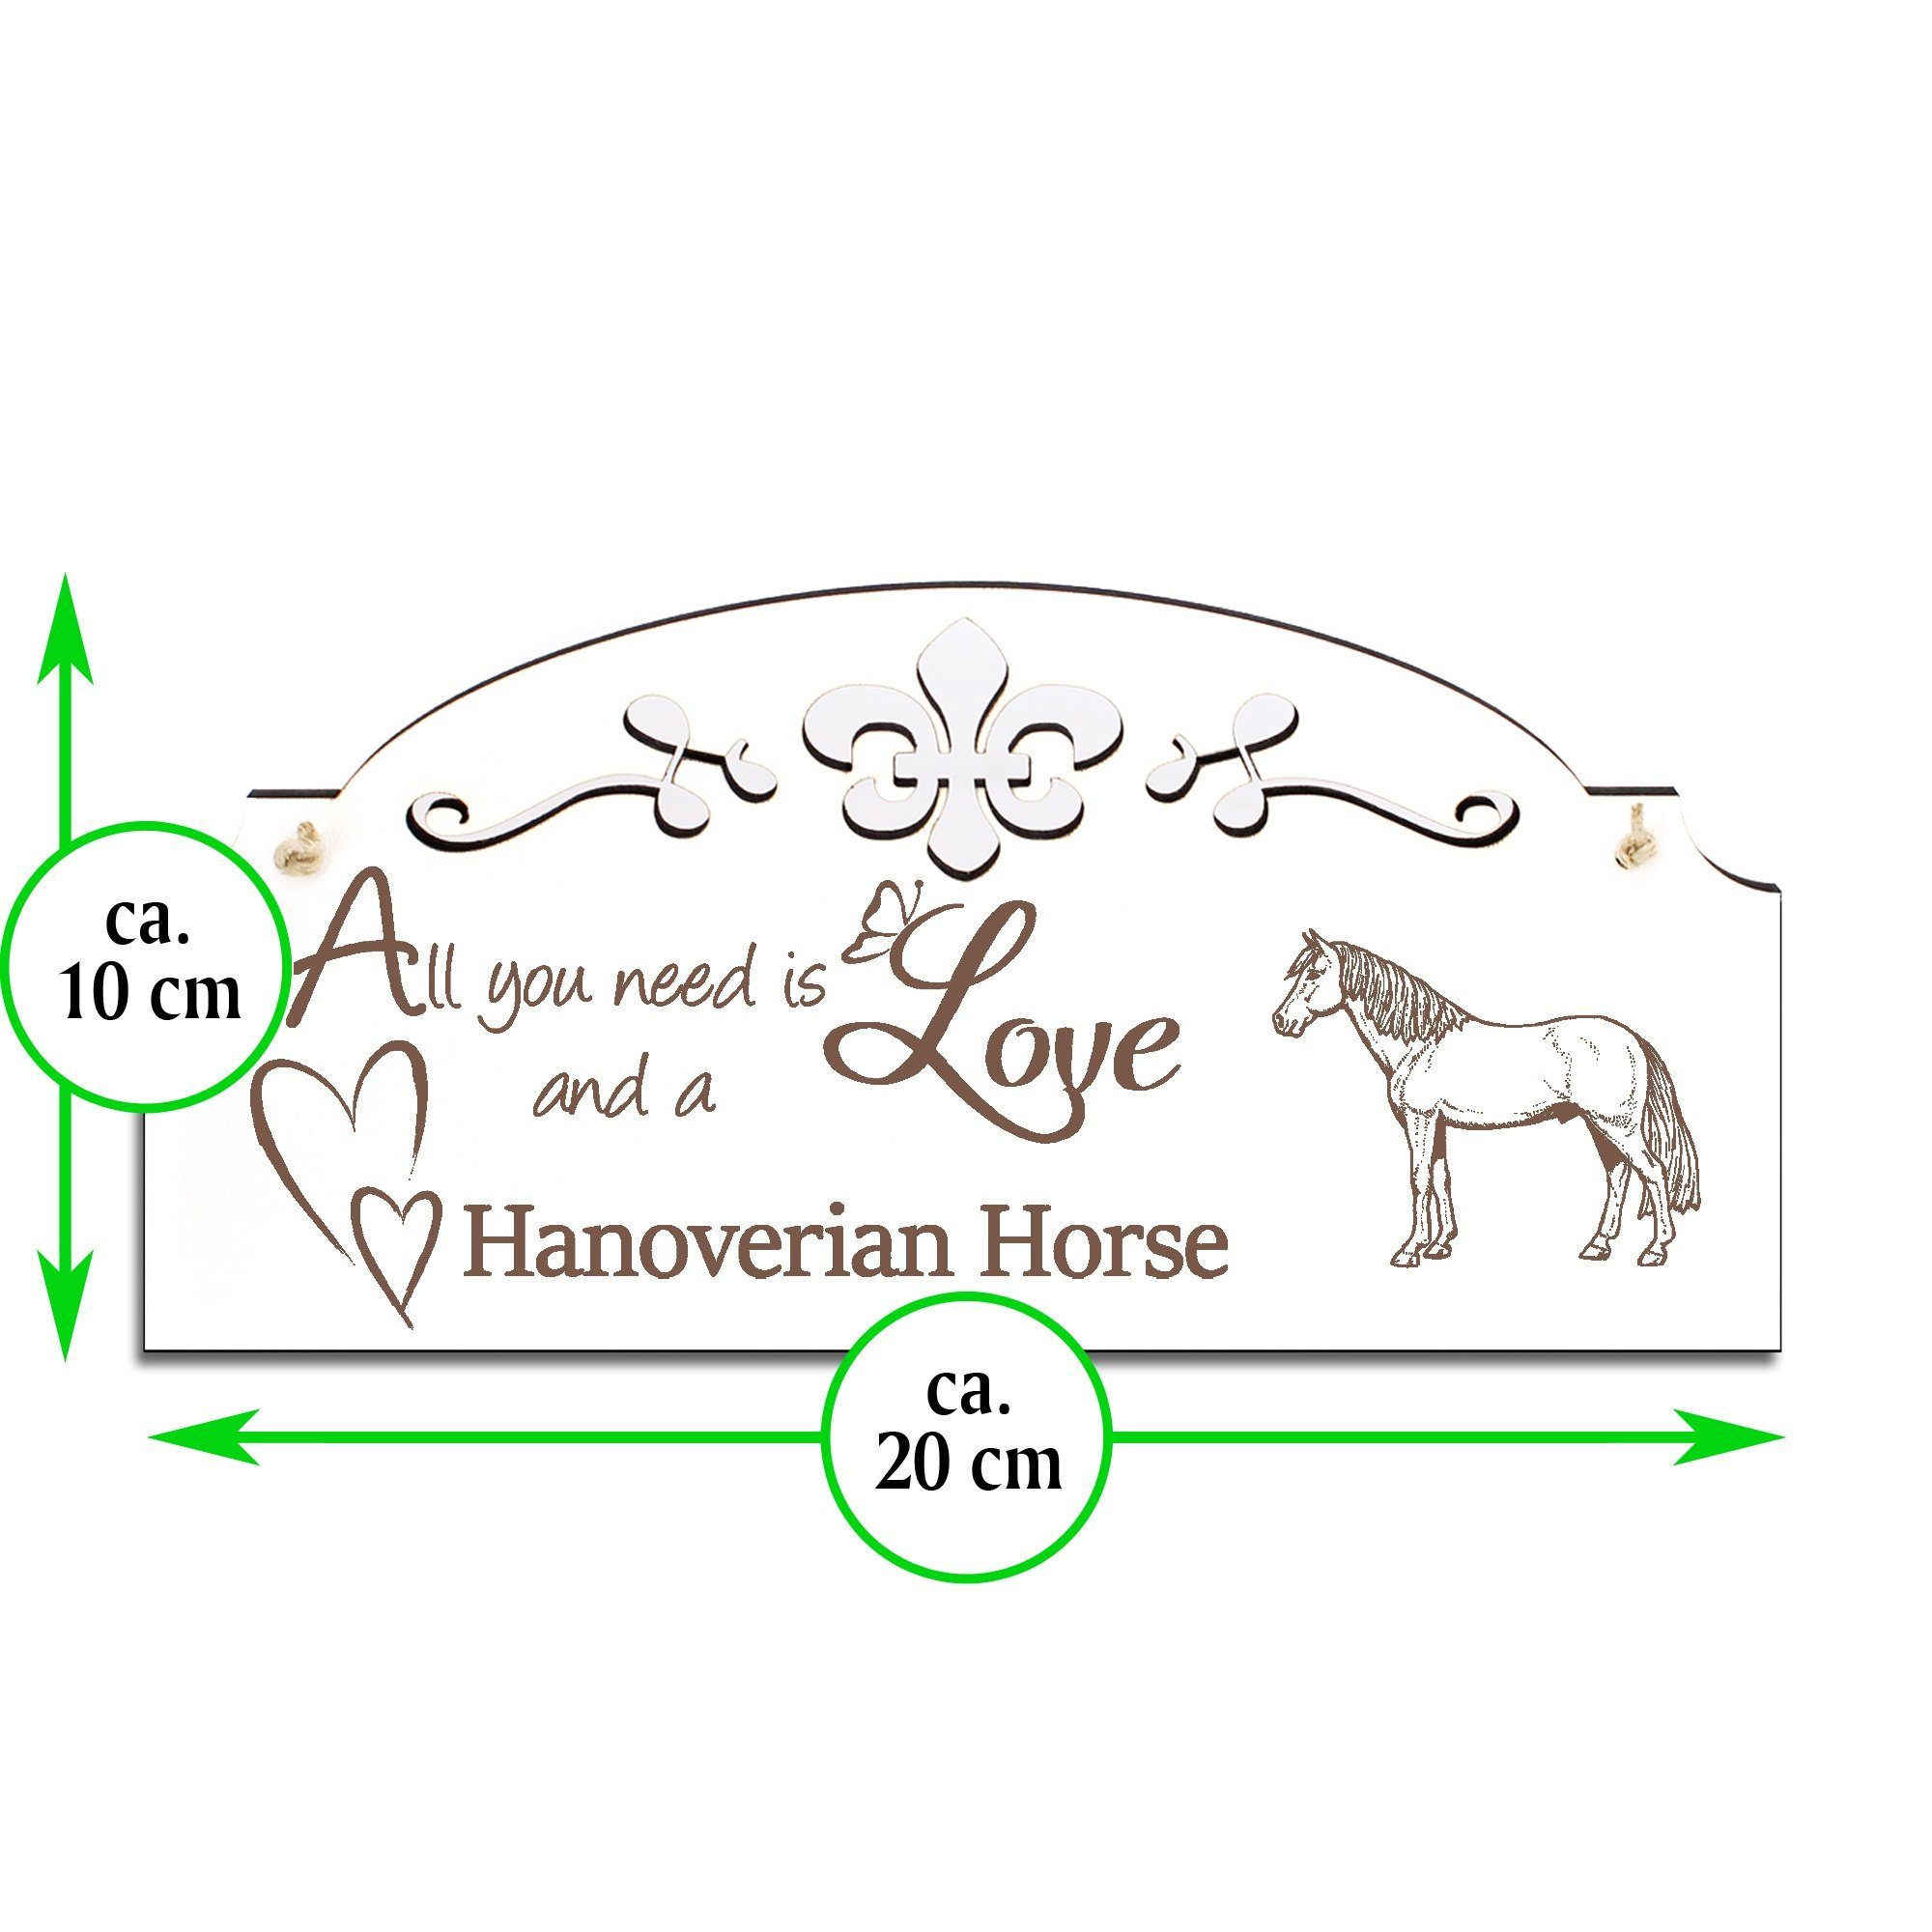 Hängedekoration Pferd need Hannoveraner Love is you 20x10cm Deko Dekolando All